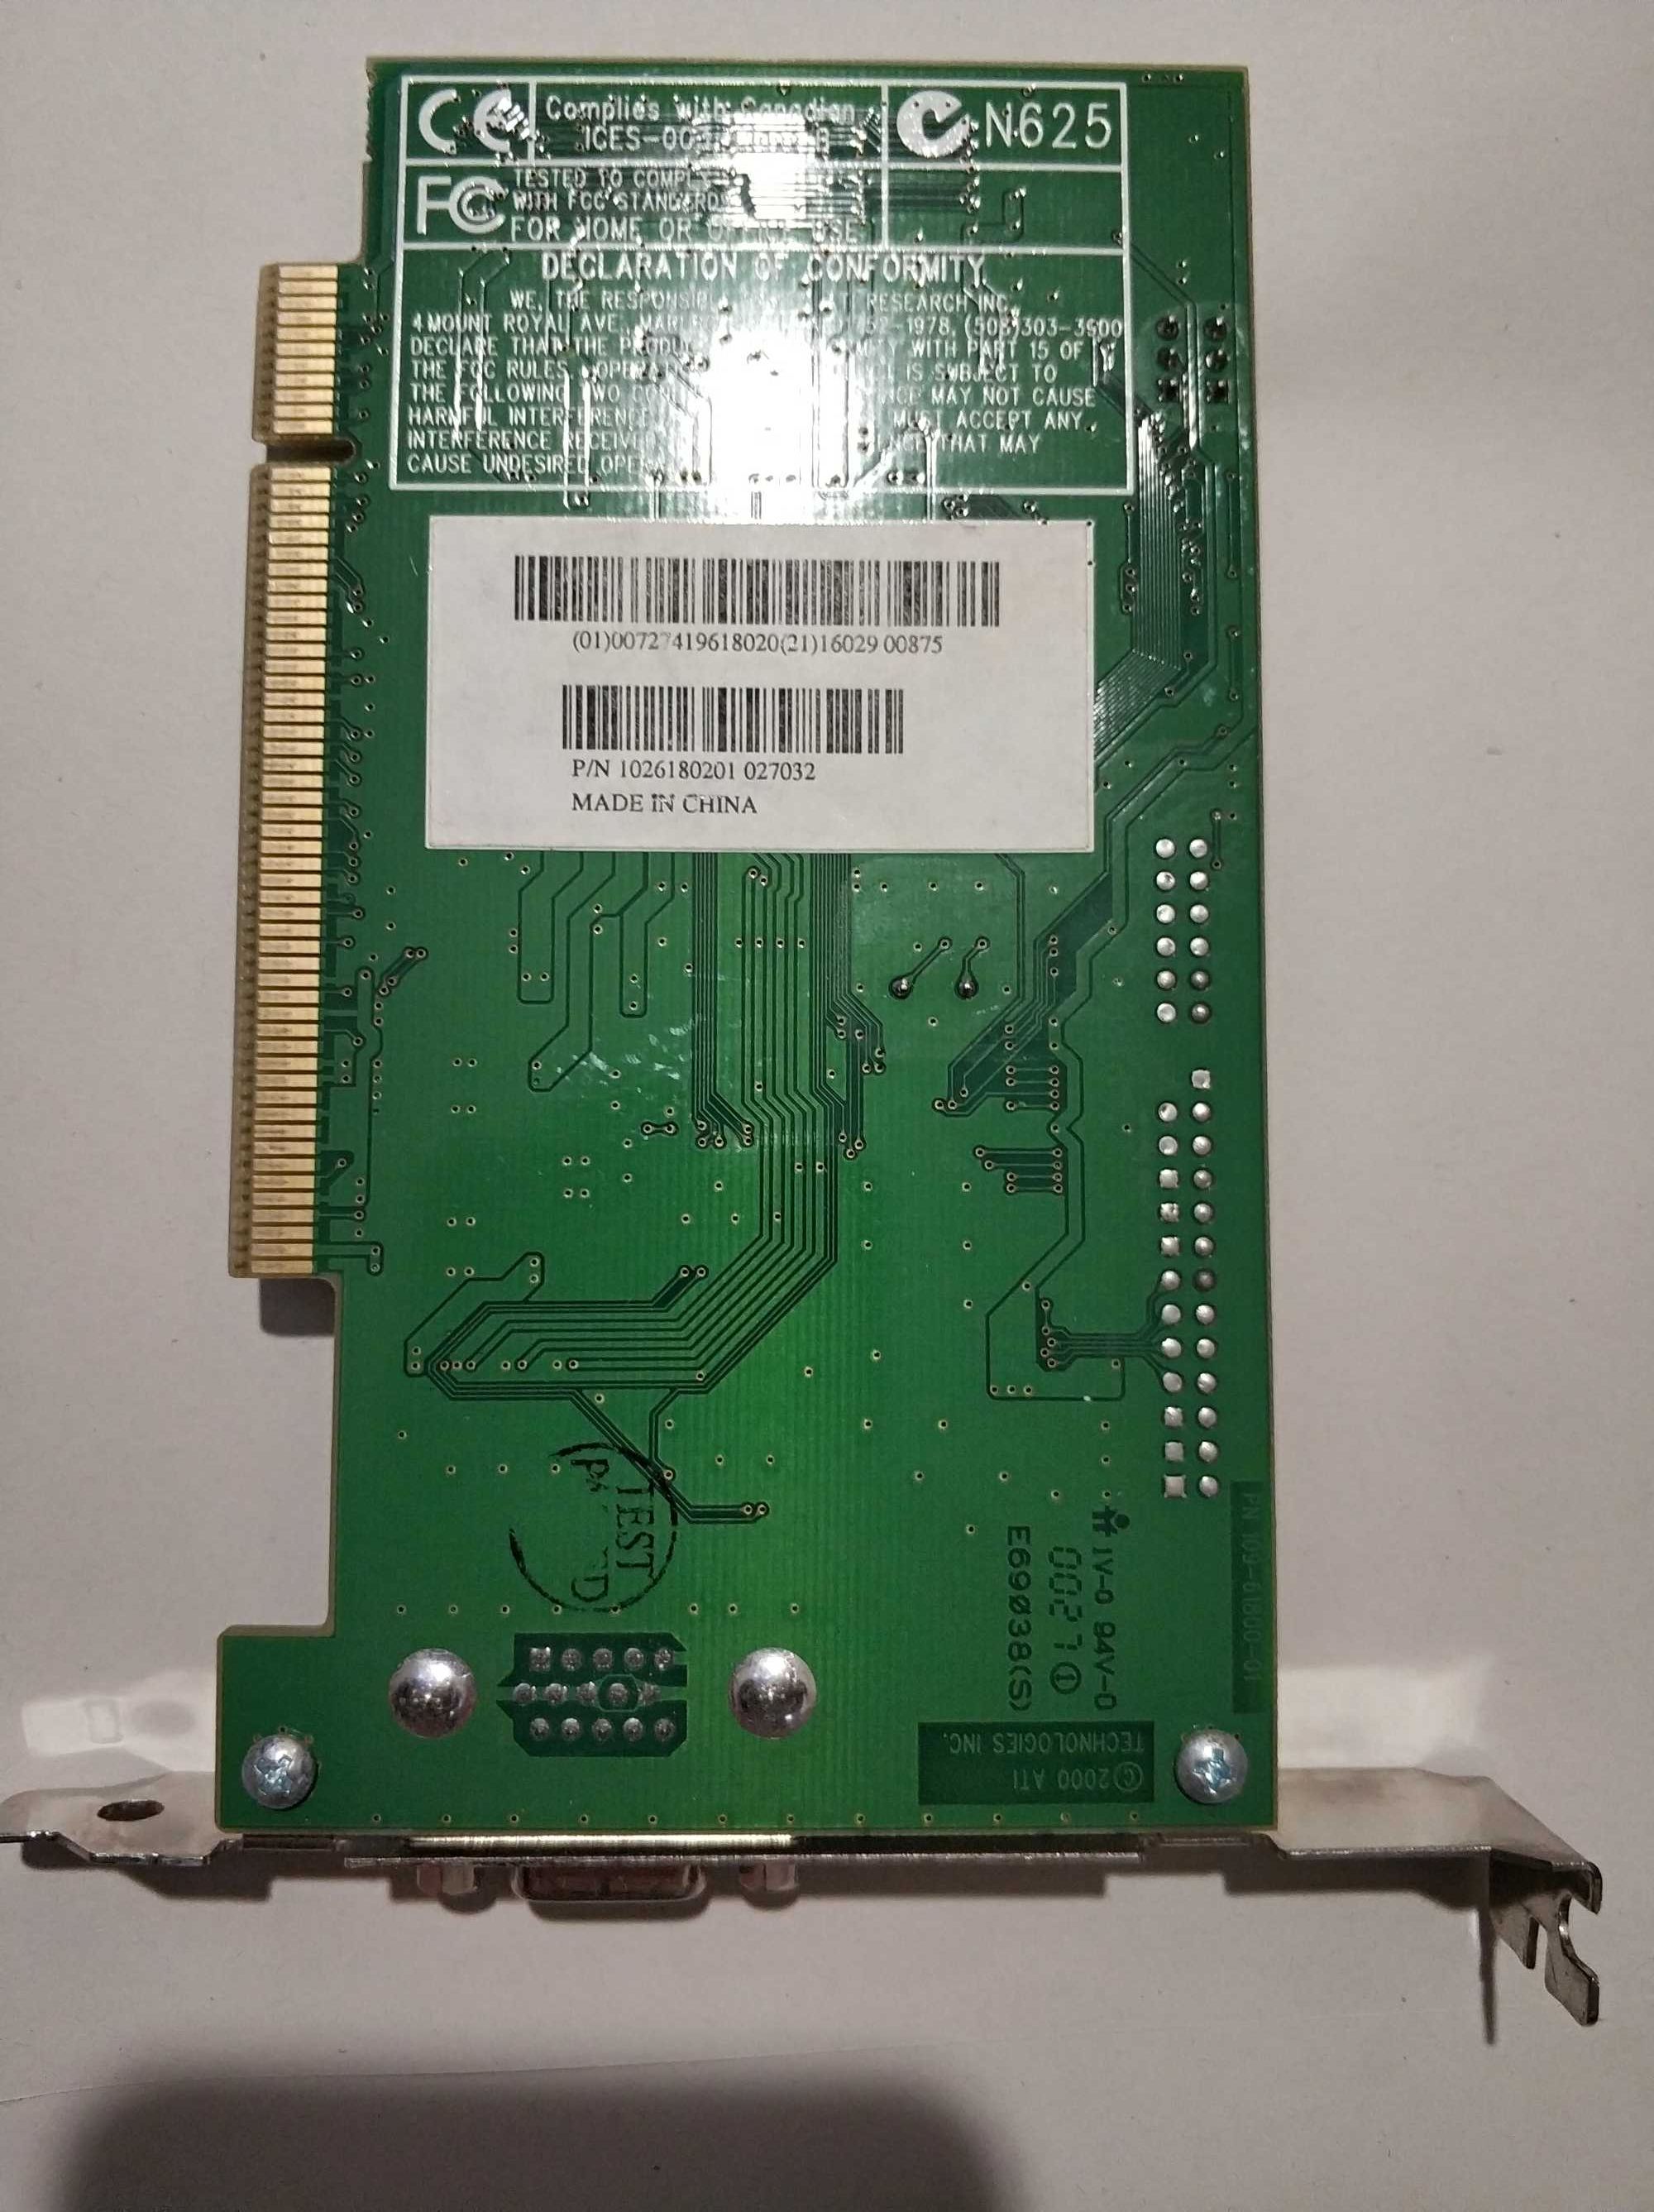 Видеокарта раритет
ATI Rage 2C IIC PCI Video Card vga
P/n 1026180201